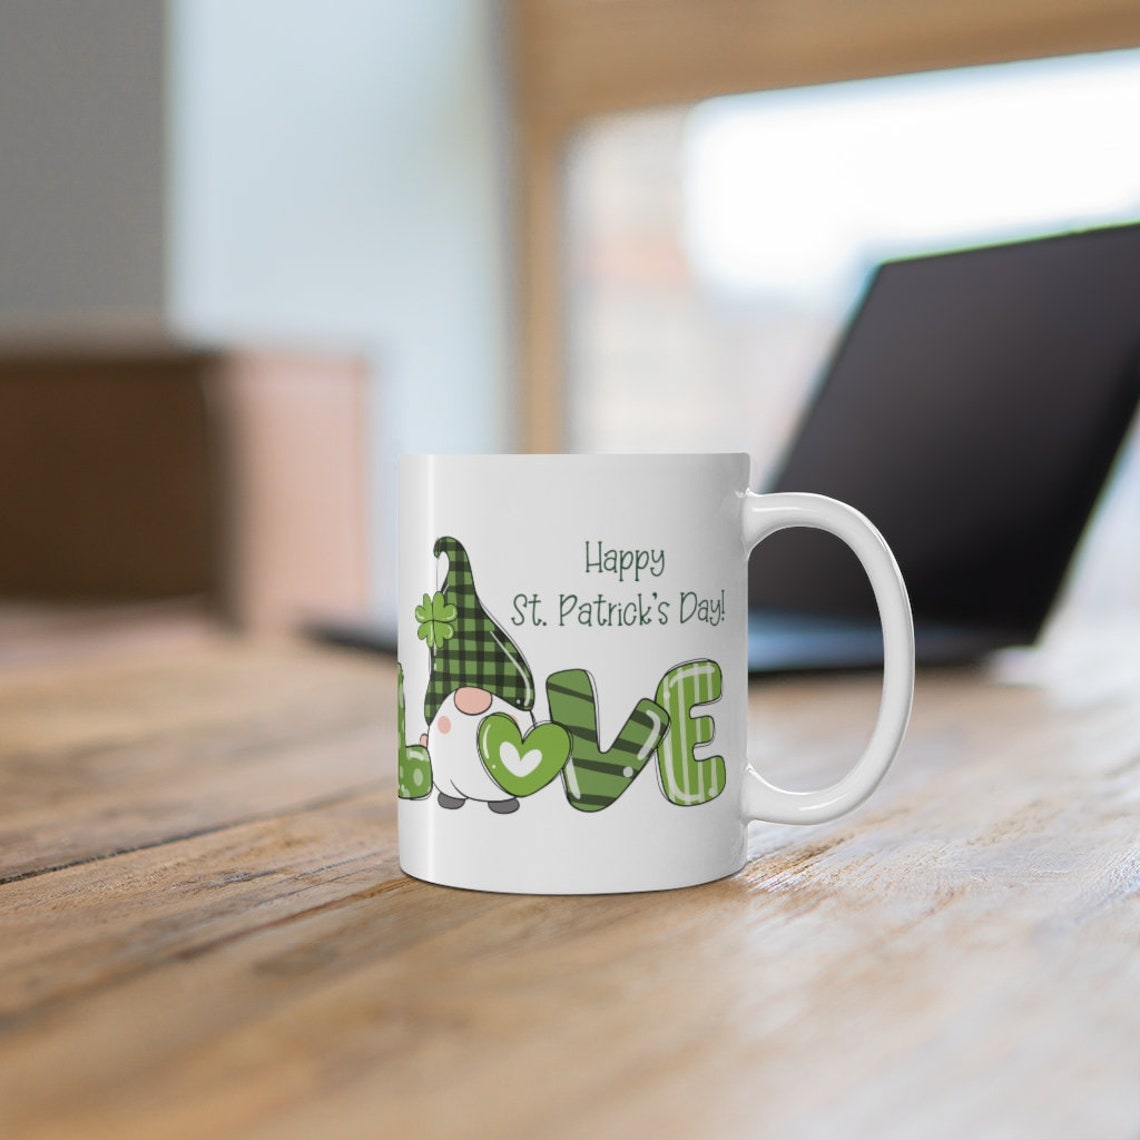 Happy St. Patrick's Day - Love Gnome Mug